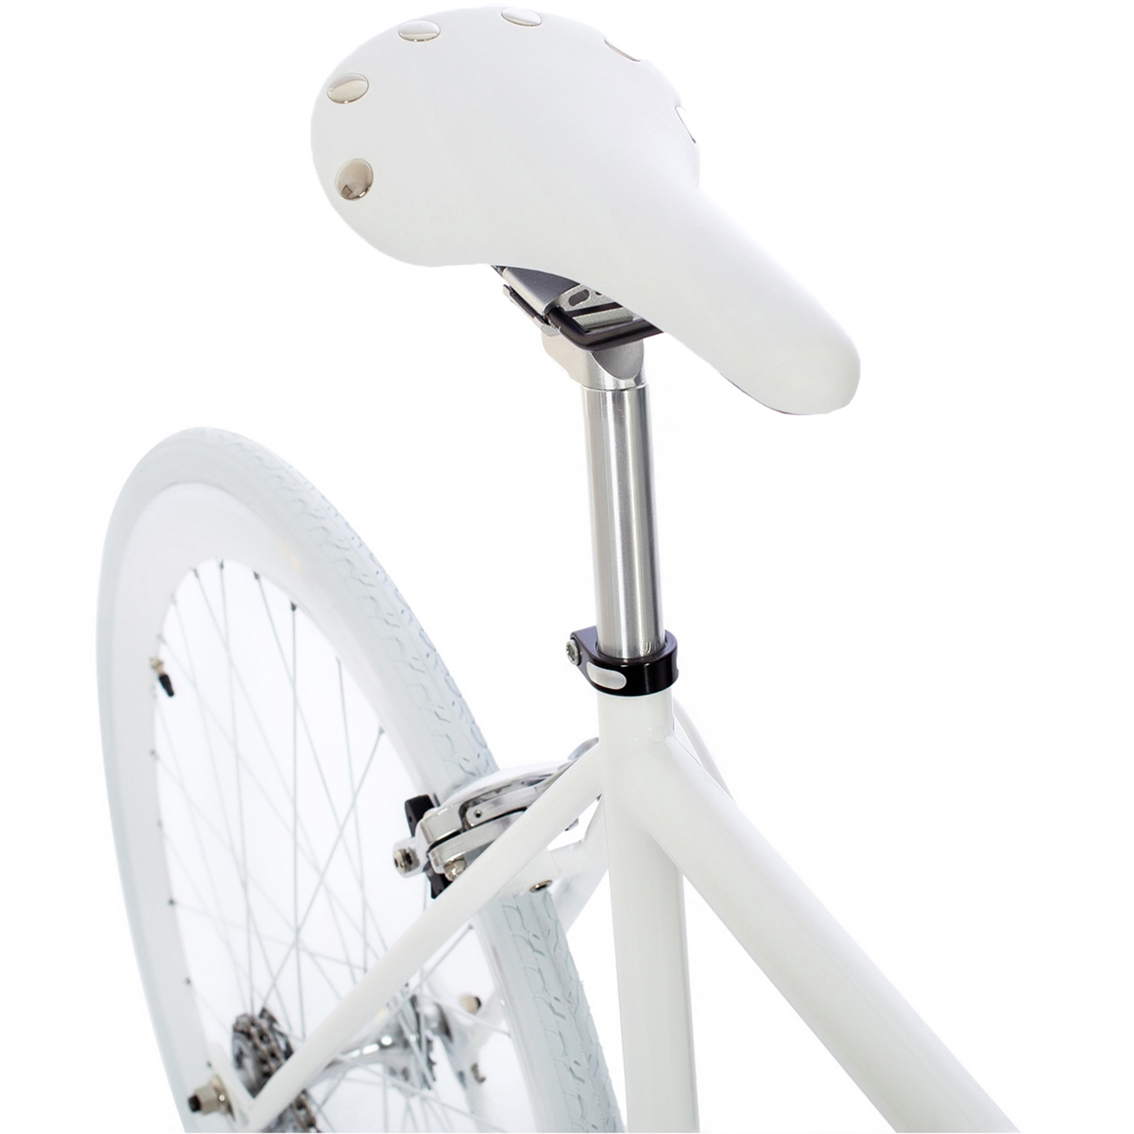 Sole el Blanco II Single Speed Bicycle - Image 4 of 5